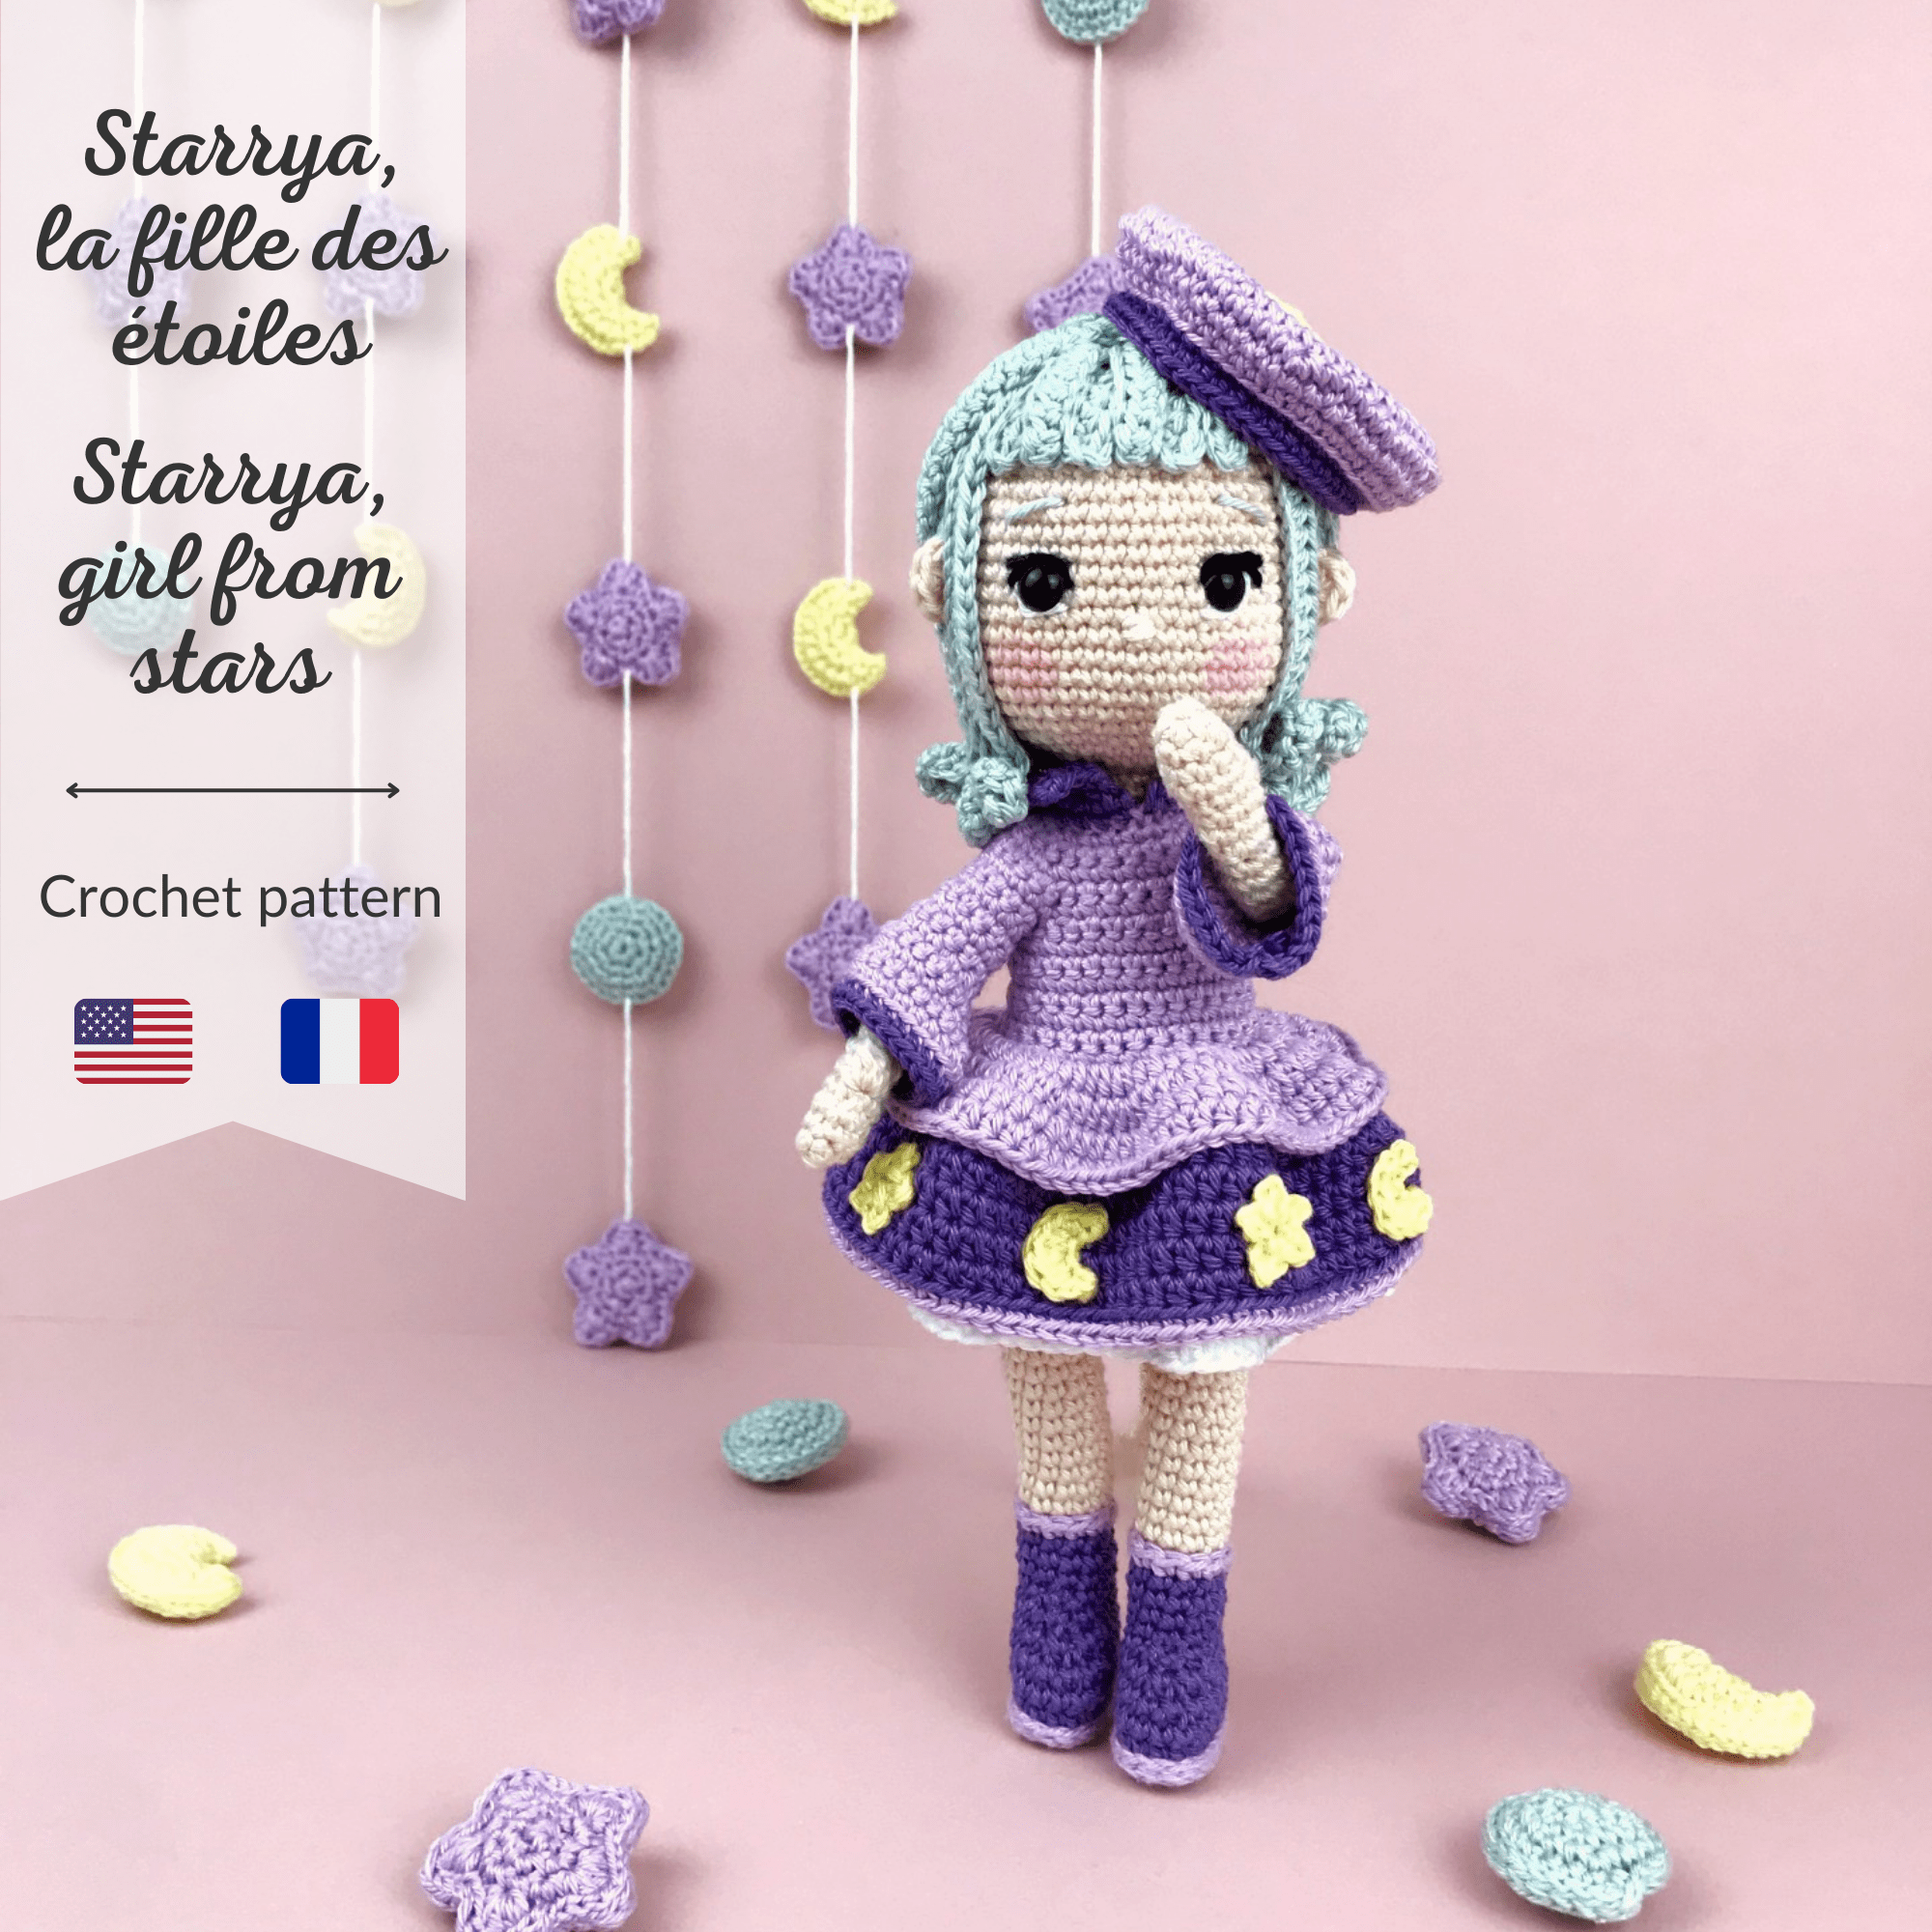 Starrya, girl from stars - Crochet Amigurumi pattern - My Rainbow Crochet